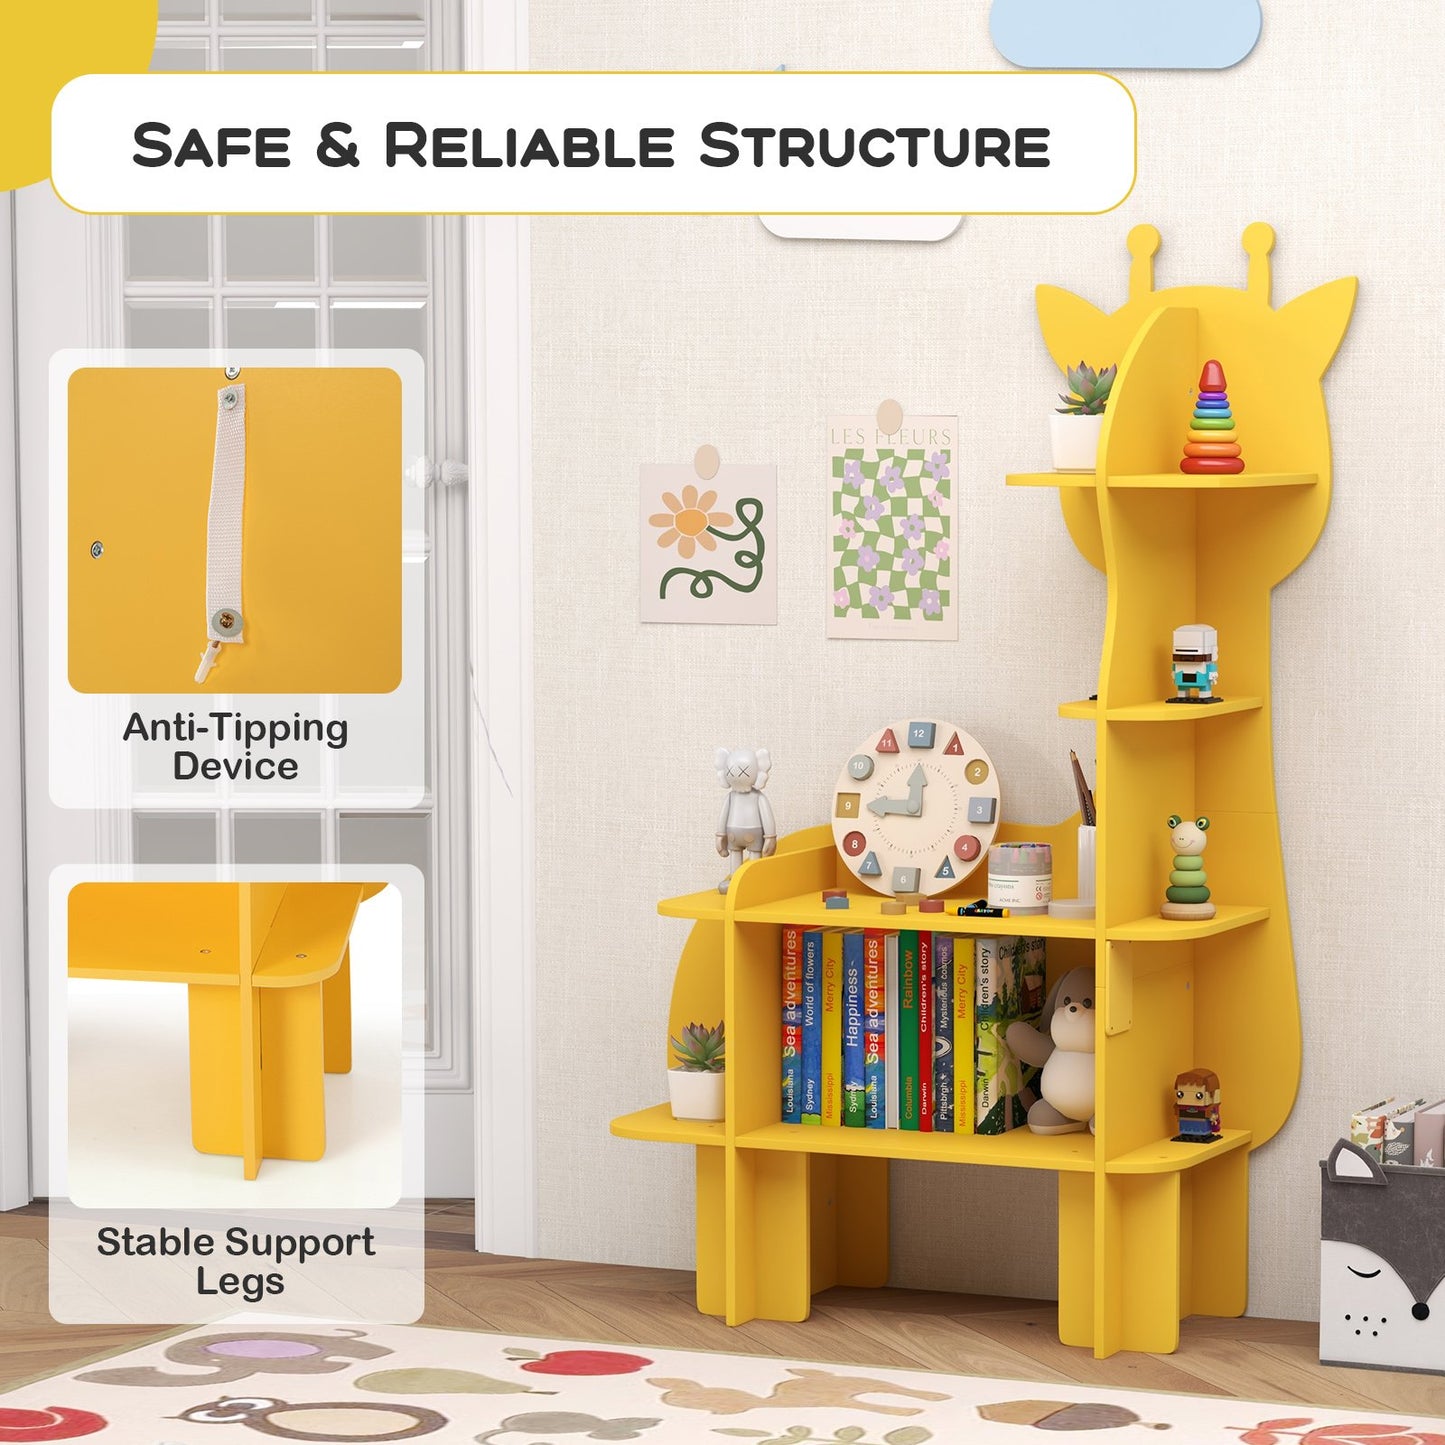 Kids Bookcase Toy Storage Organizer with Open Storage Shelves-Giraffe, Yellow